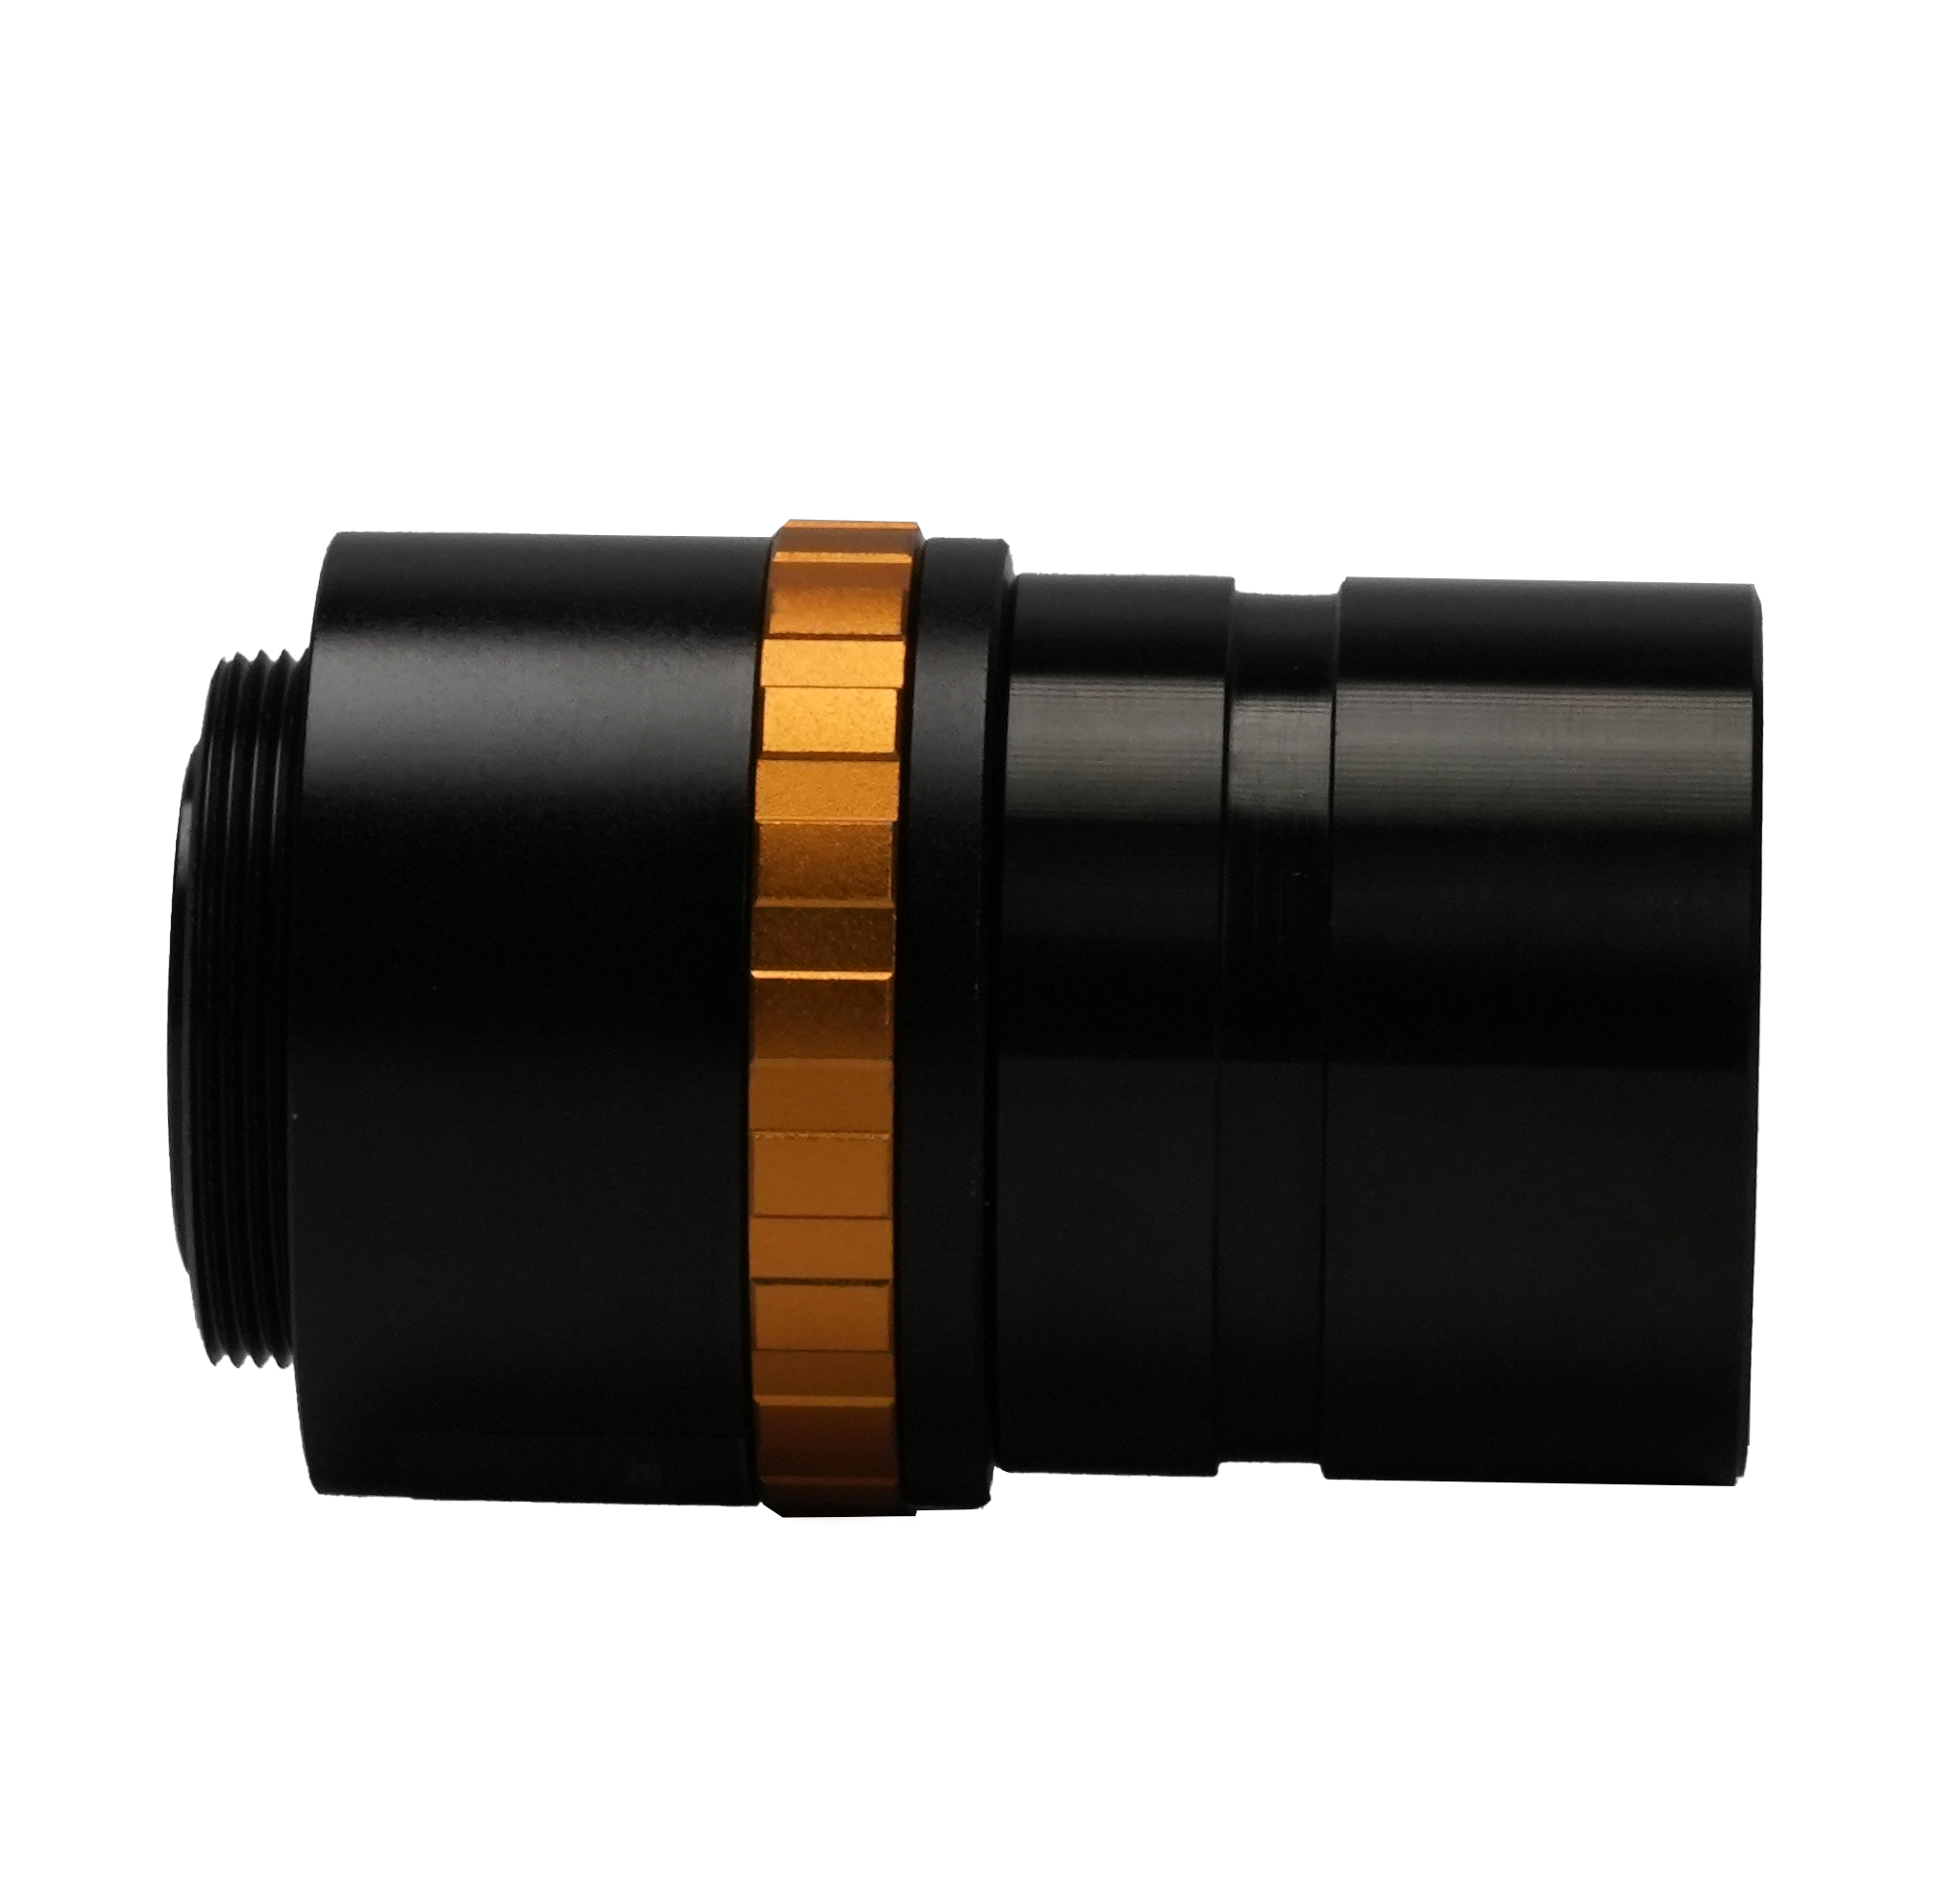 BCN3A-1x Adjustable 31.75mm Microscope Eyepiece Adapter